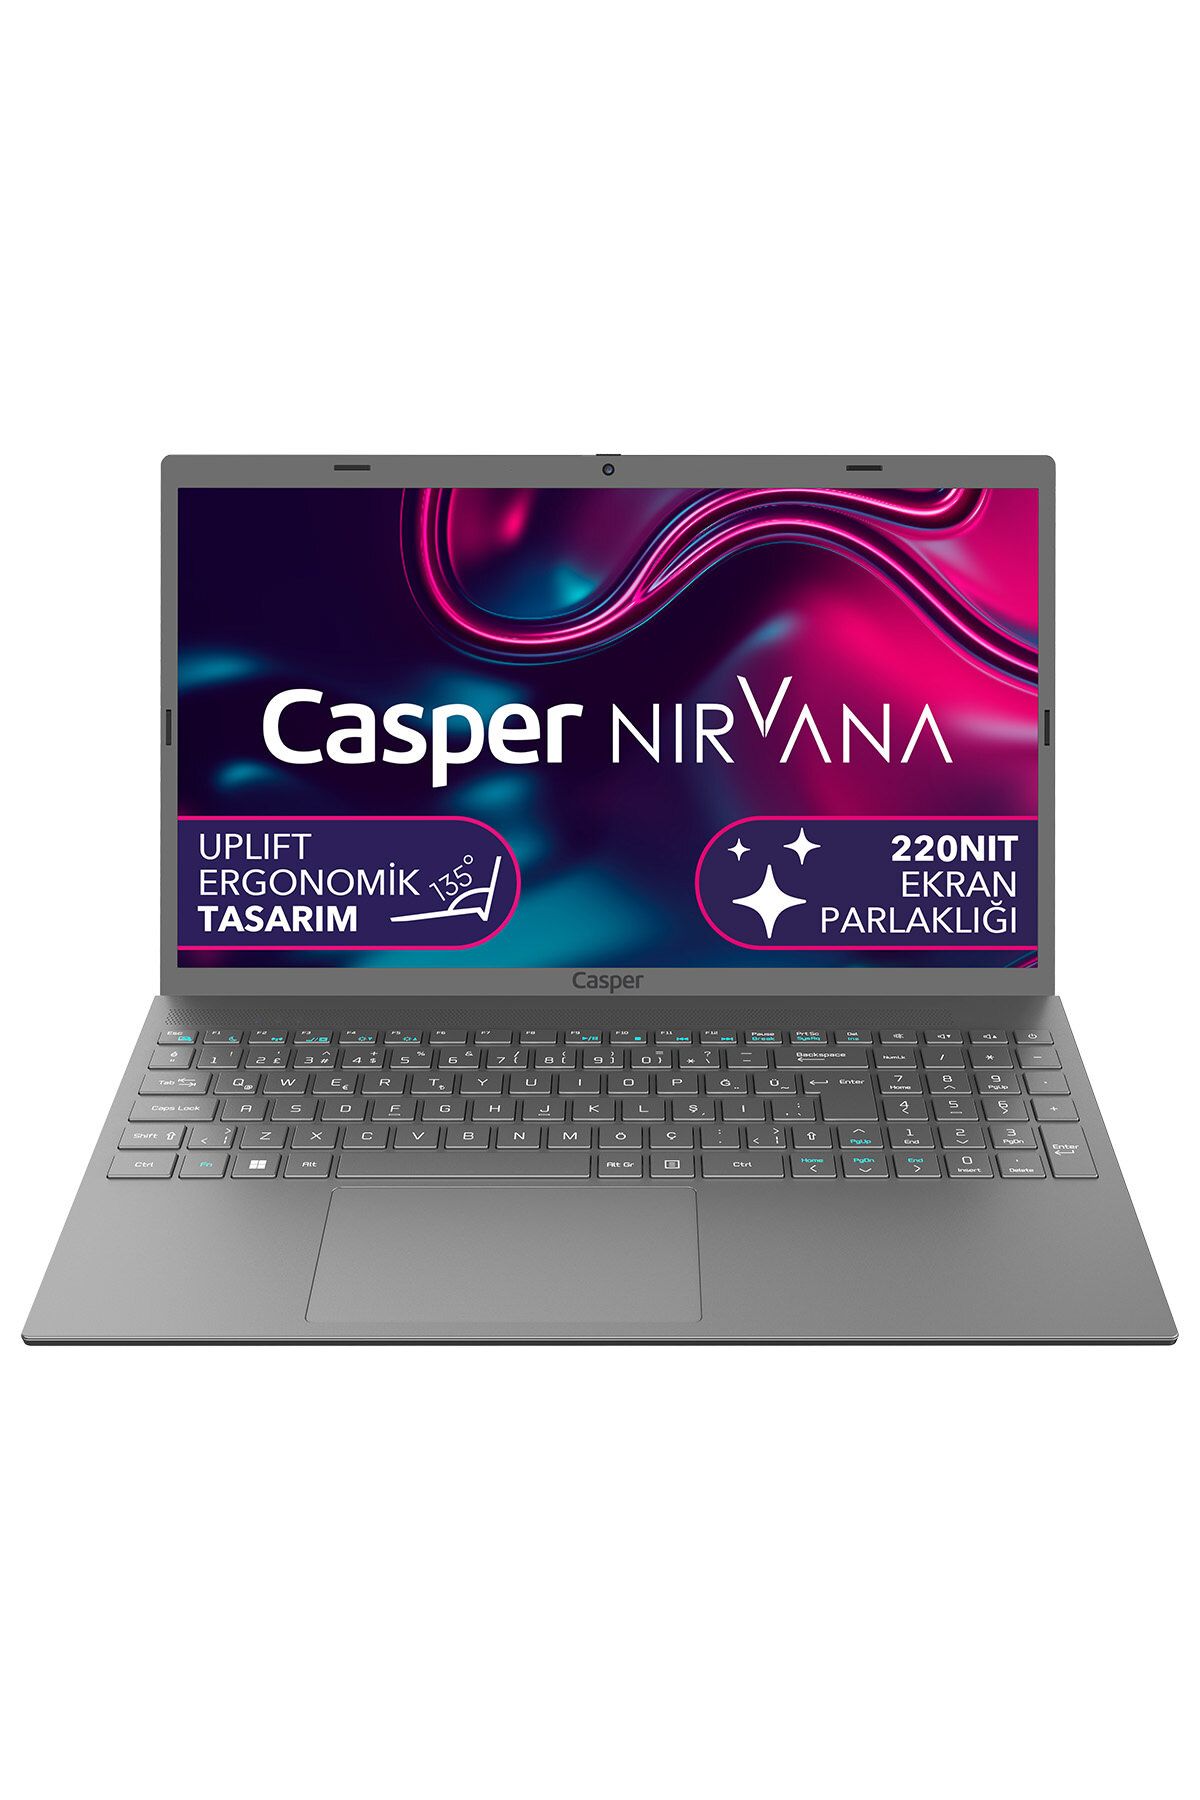 Casper Nirvana C370.4020-4D00X Intel Celeron N4020 4GB RAM 240GB SSD Freedos